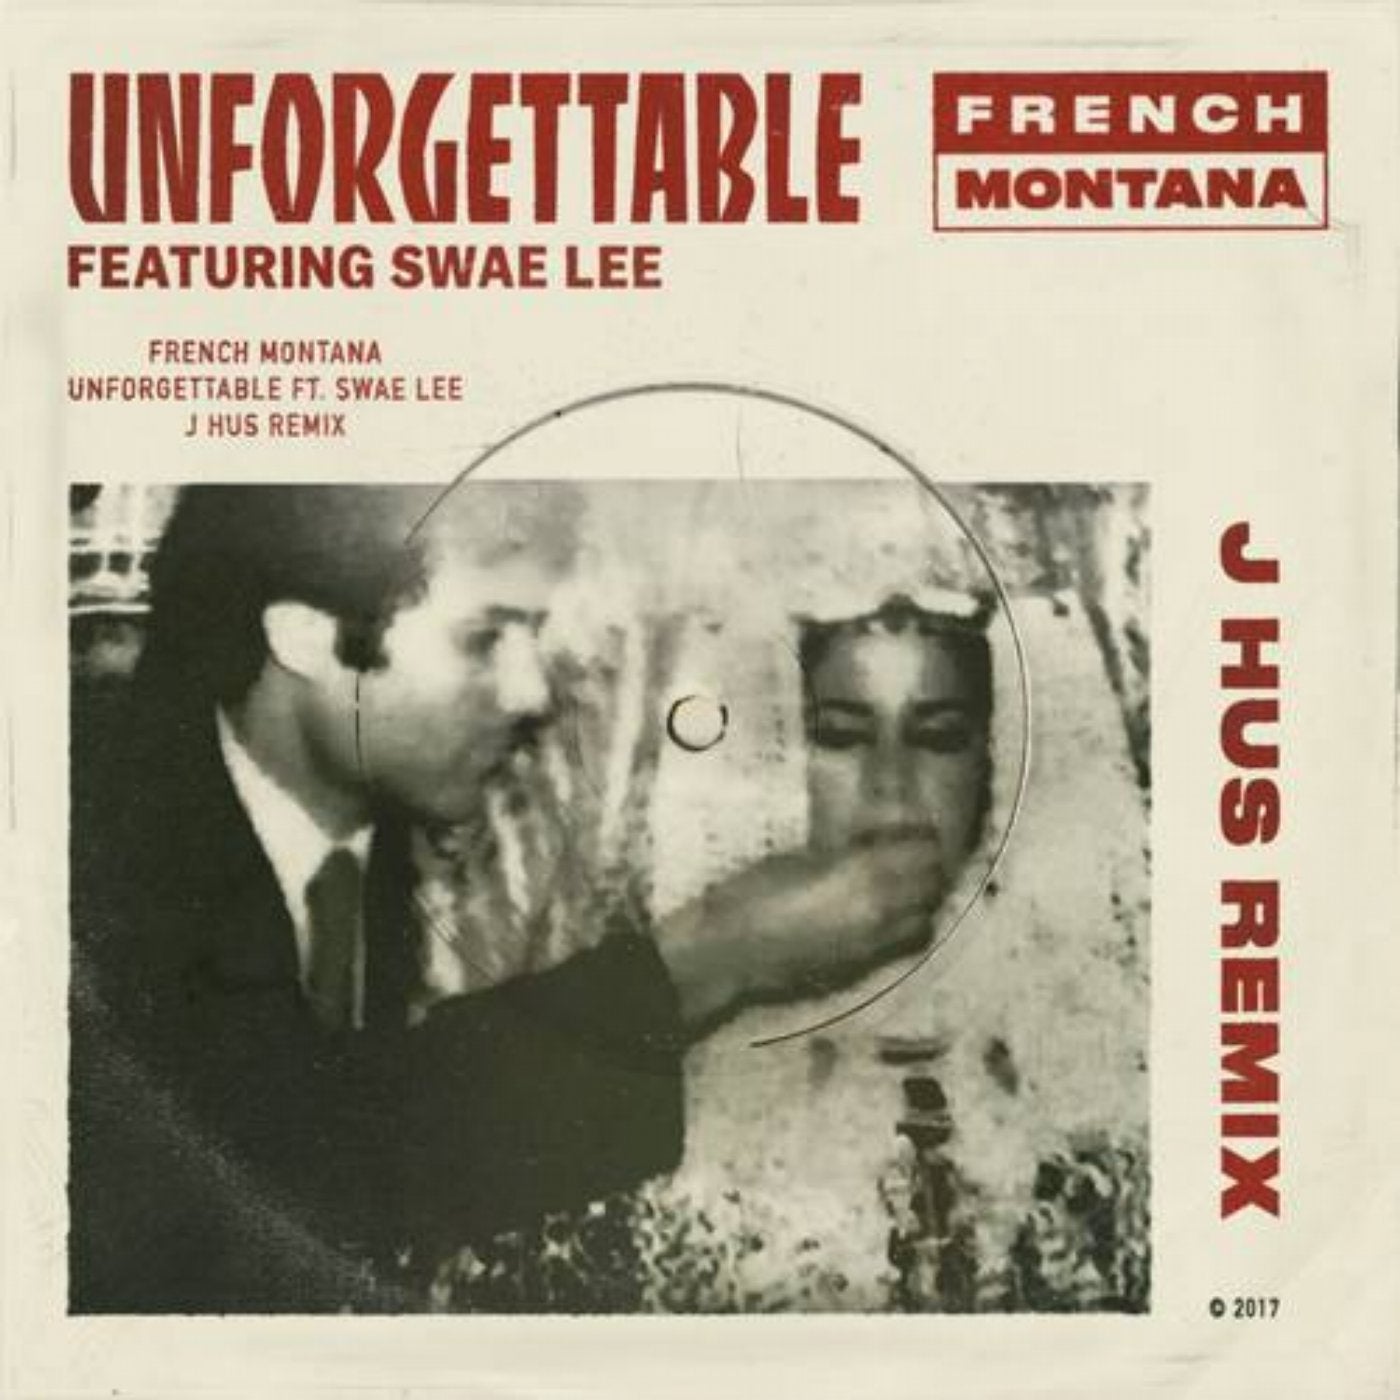 French montana unforgettable. Unforgettable French Montana обложка. Unforgettable French Montana feat. Swae. Swae Lee Unforgettable. Unforgettable (feat. Swae Lee).